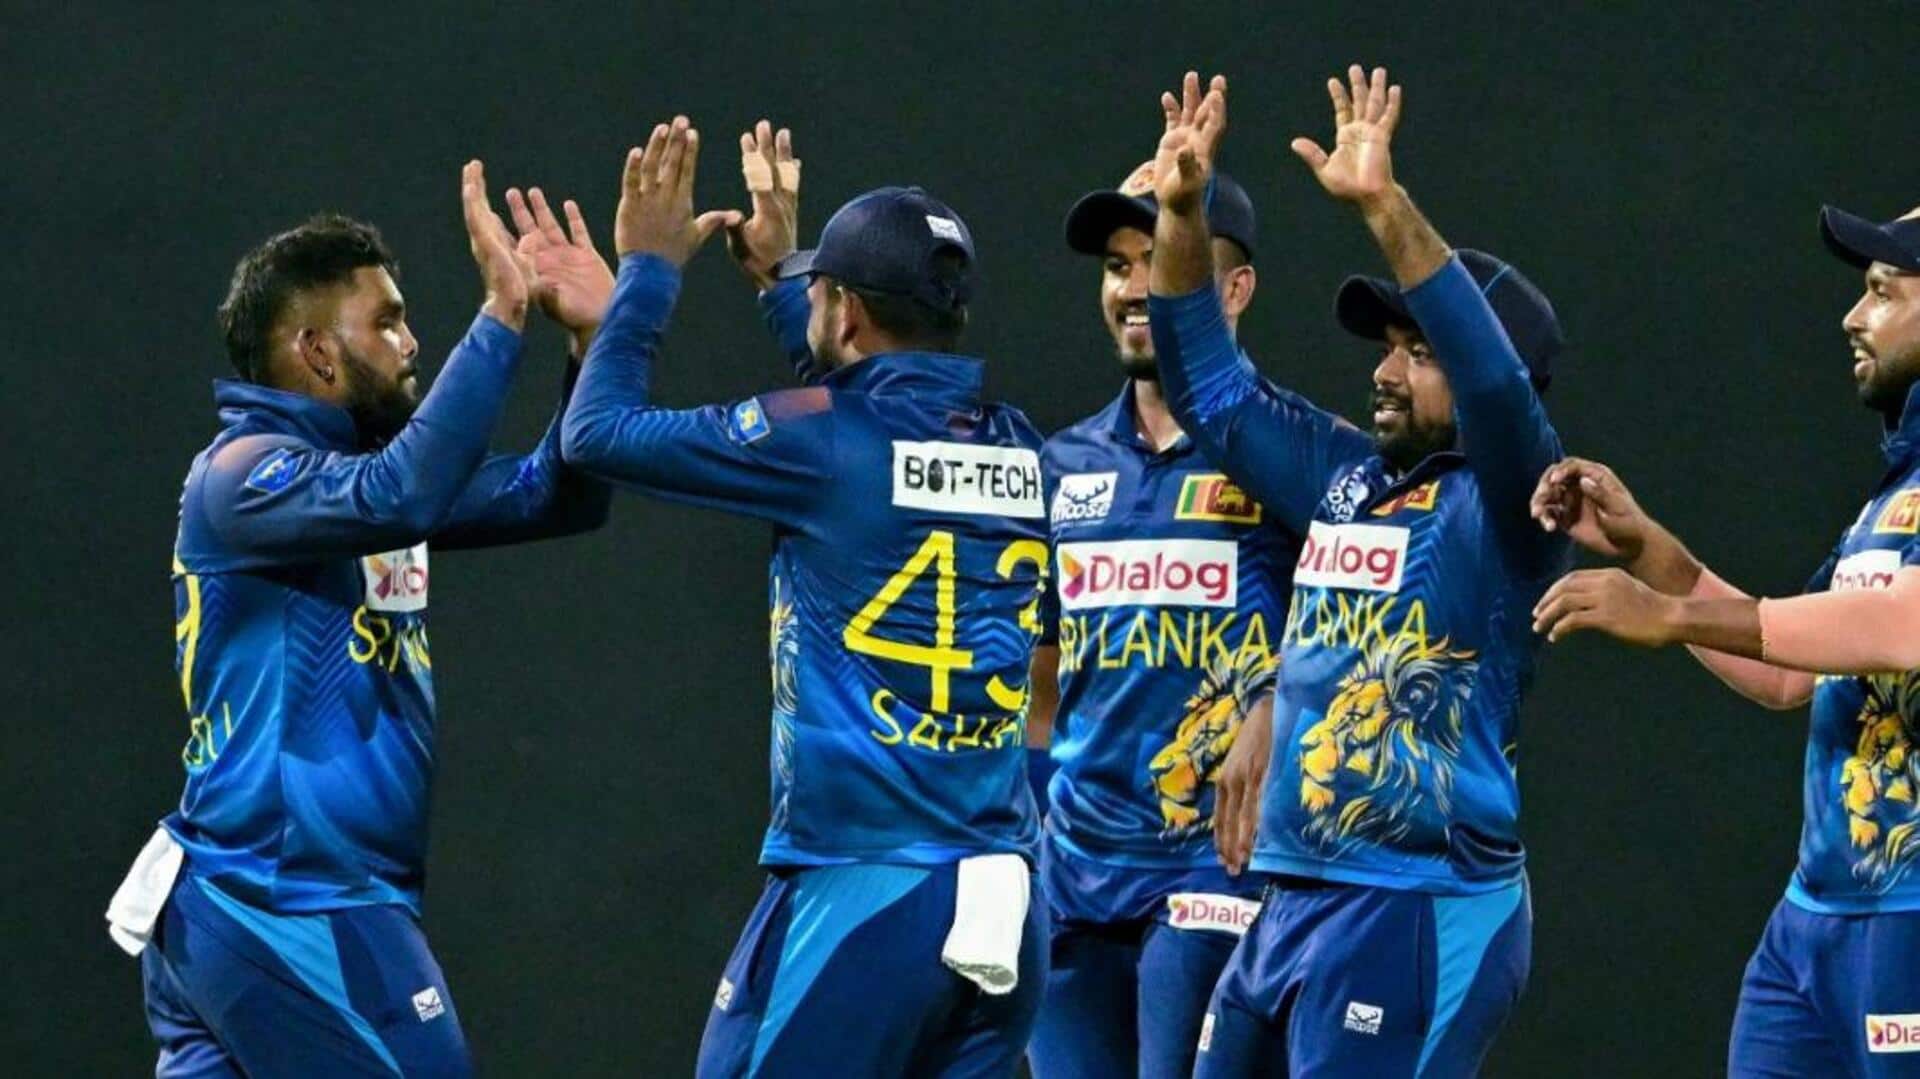 Sri Lanka win their seventh bilateral ODI series against Zimbabwe